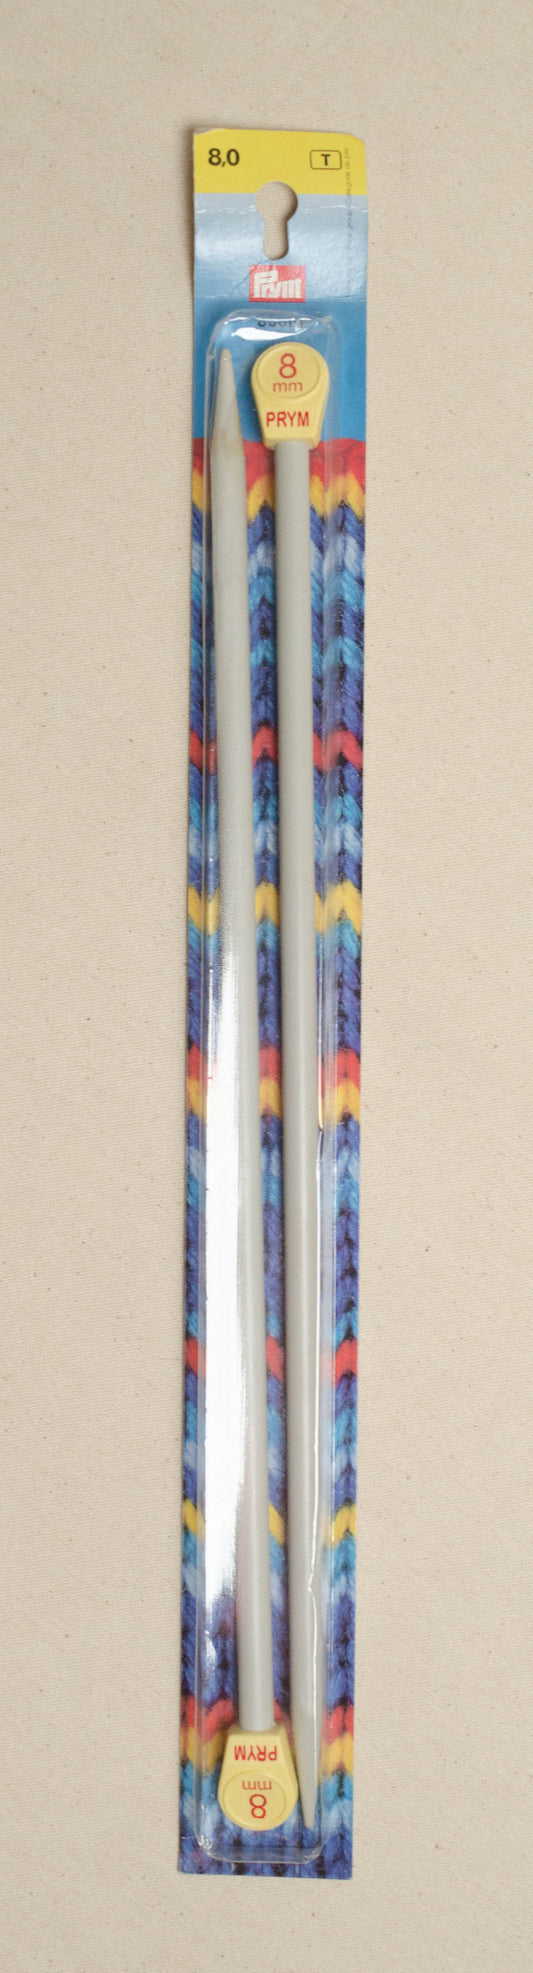 Prym 35cm Knitting Needles - 35cm X 8.0mm